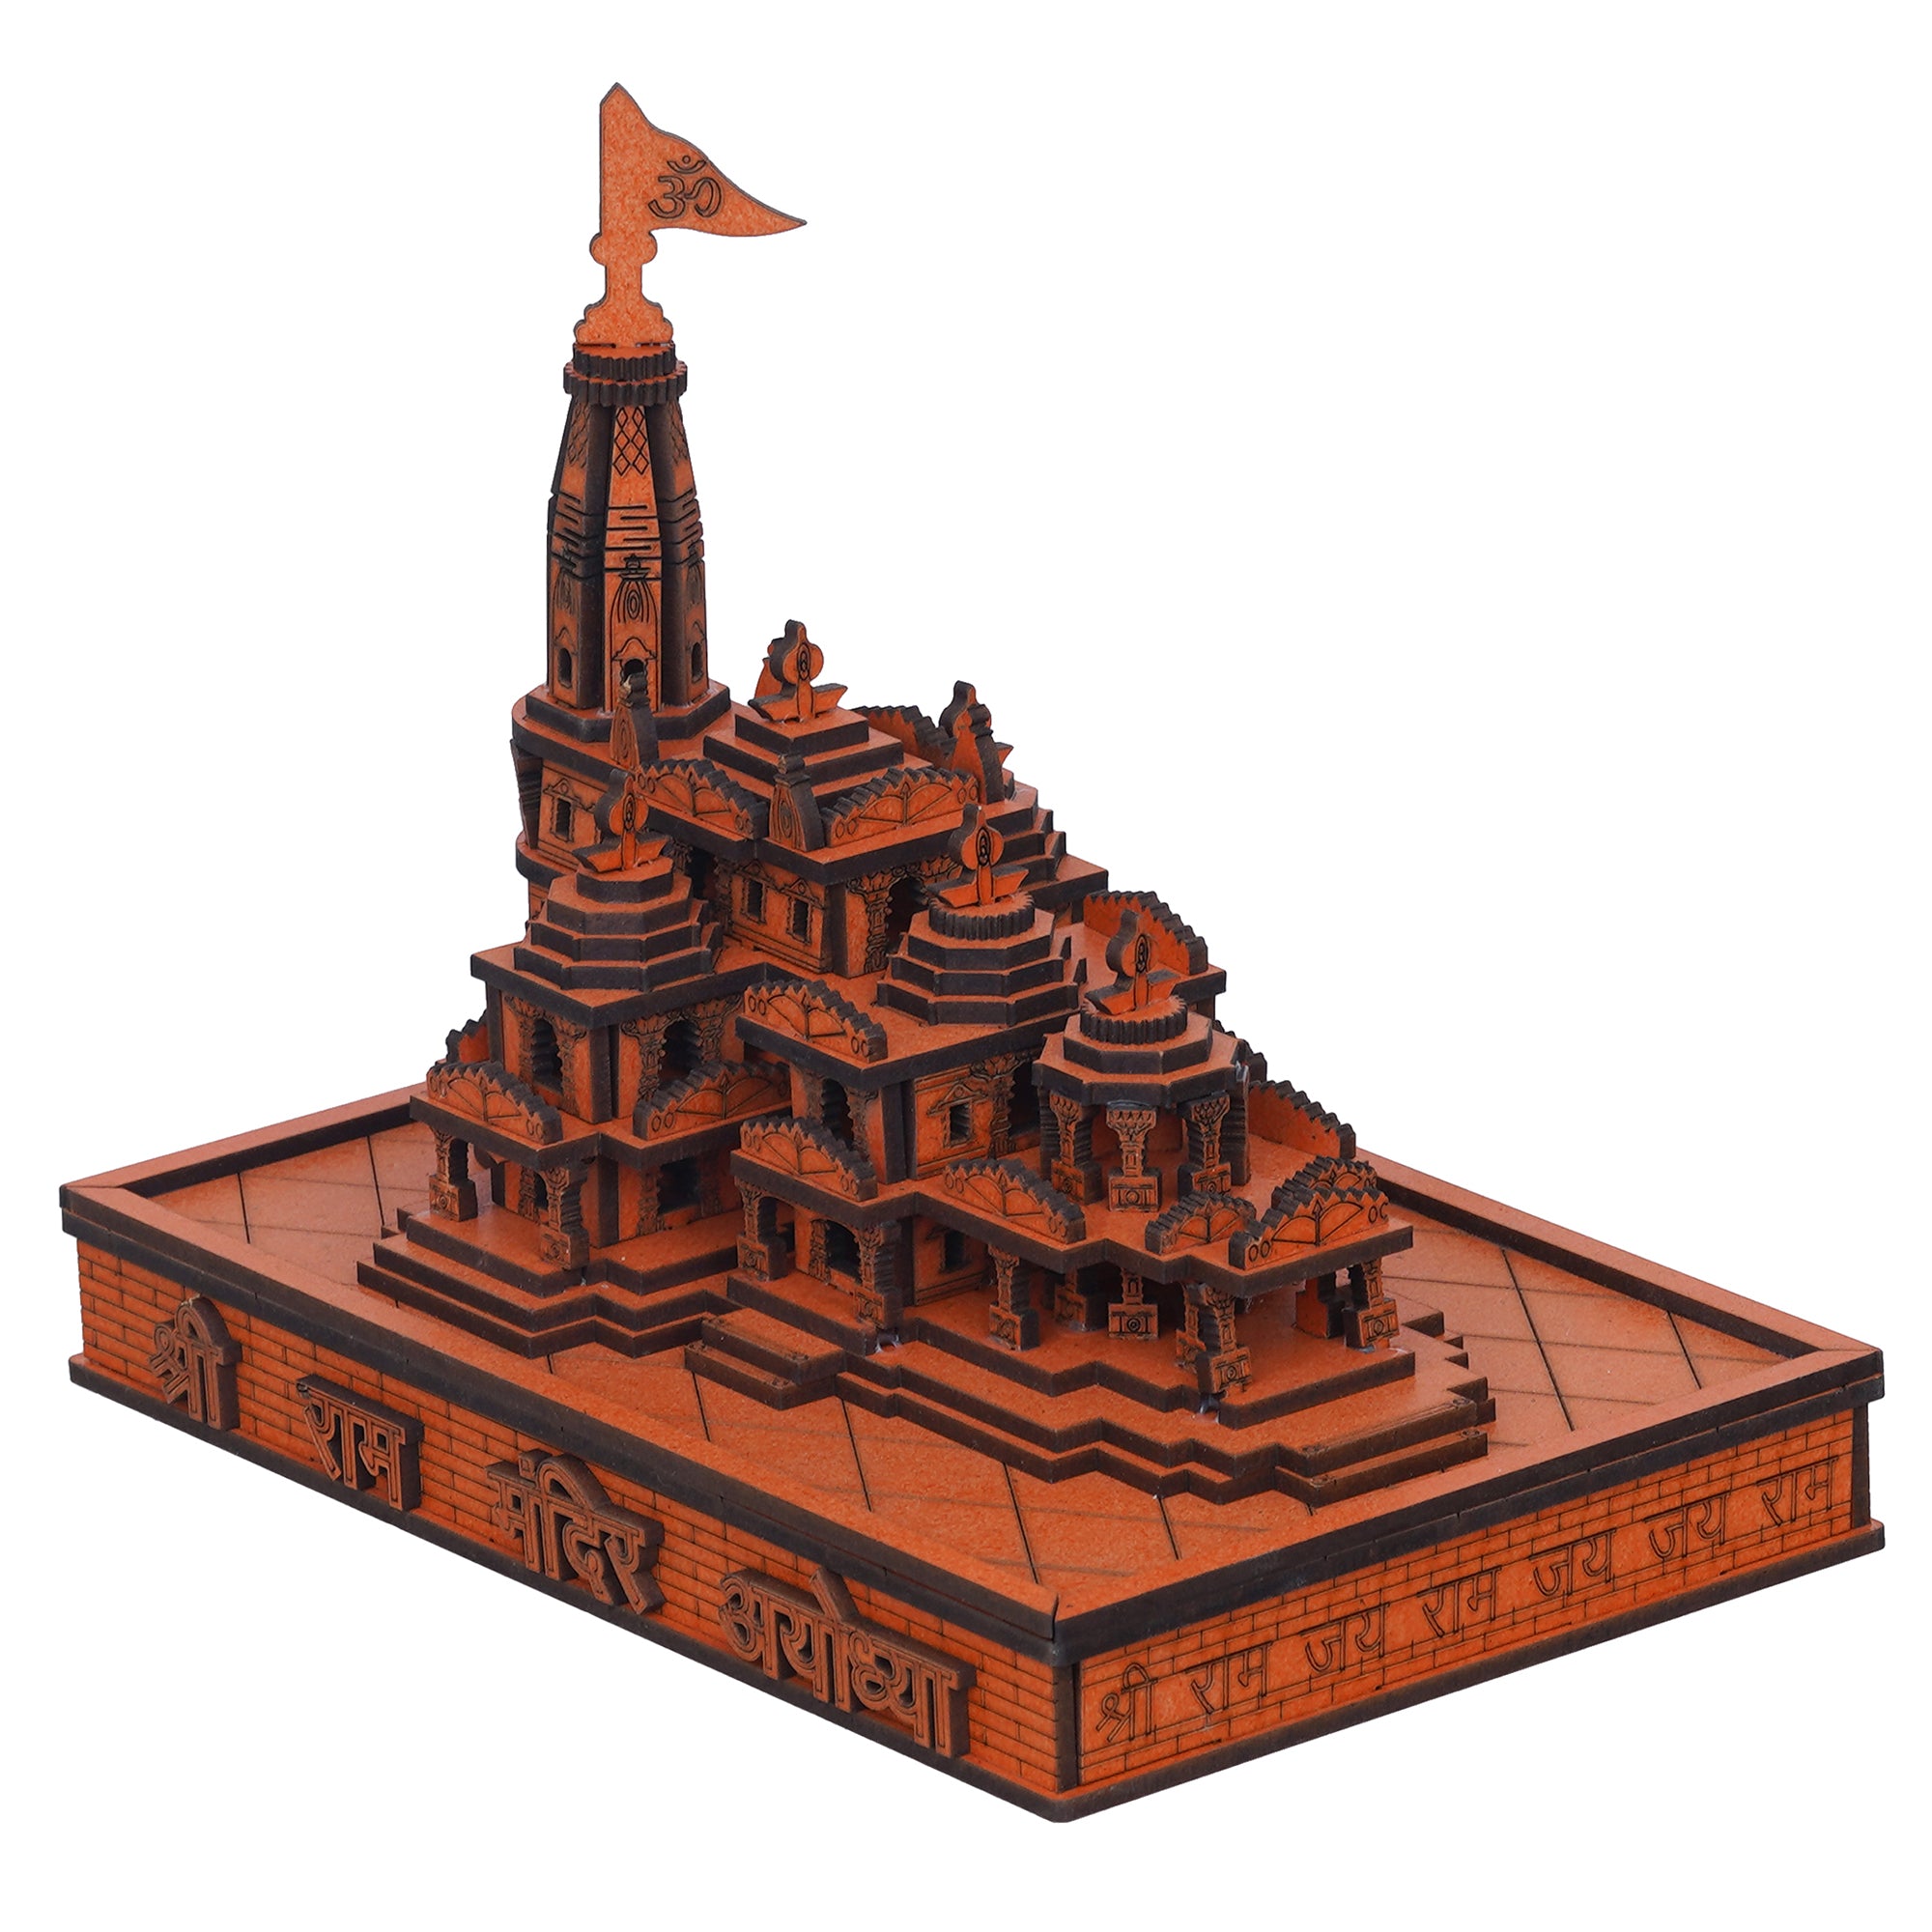 eCraftIndia Shri Ram Mandir Ayodhya Model - Wooden MDF Craftsmanship Authentic Designer Temple - Ideal for Home Temple, Decor, and Spiritual Gifting (Orange) 2